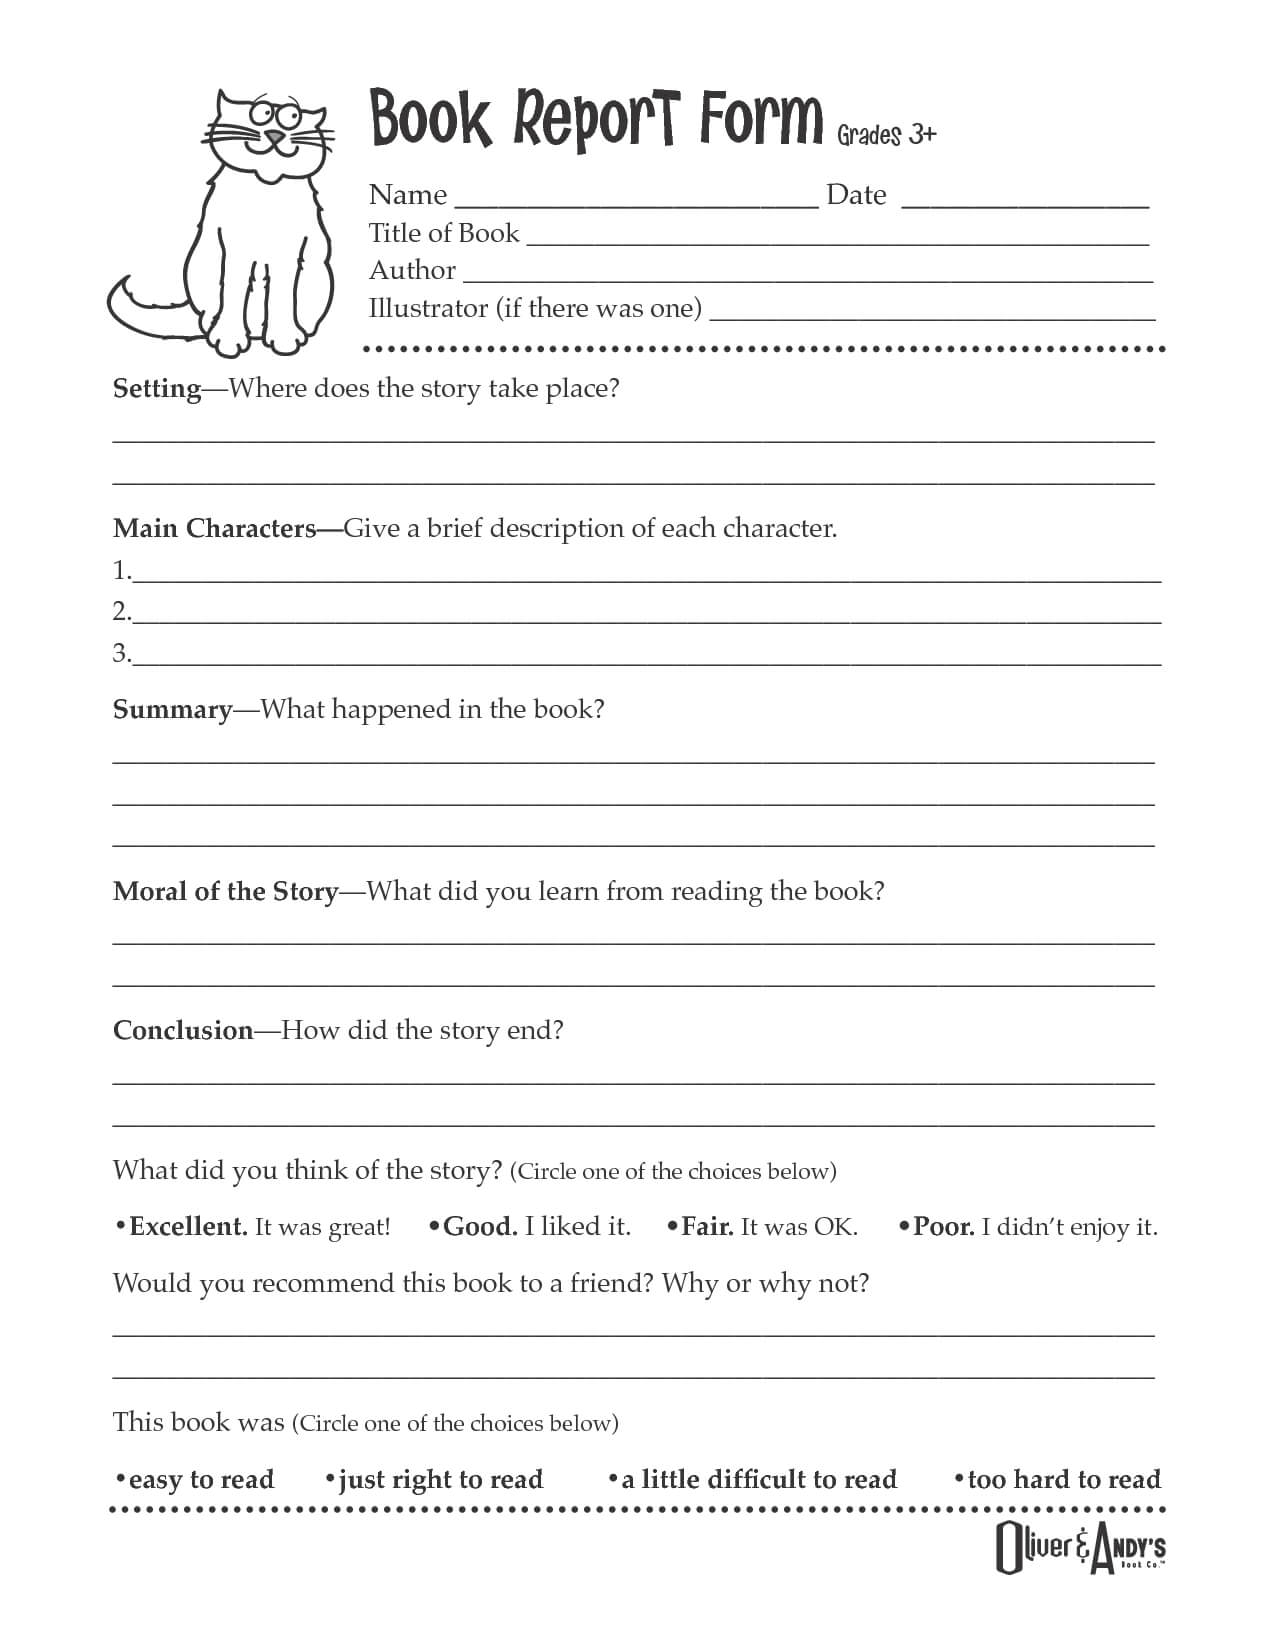 Second Grade Book Report Template | Book Report Form Grades With Regard To Book Report Template 4Th Grade